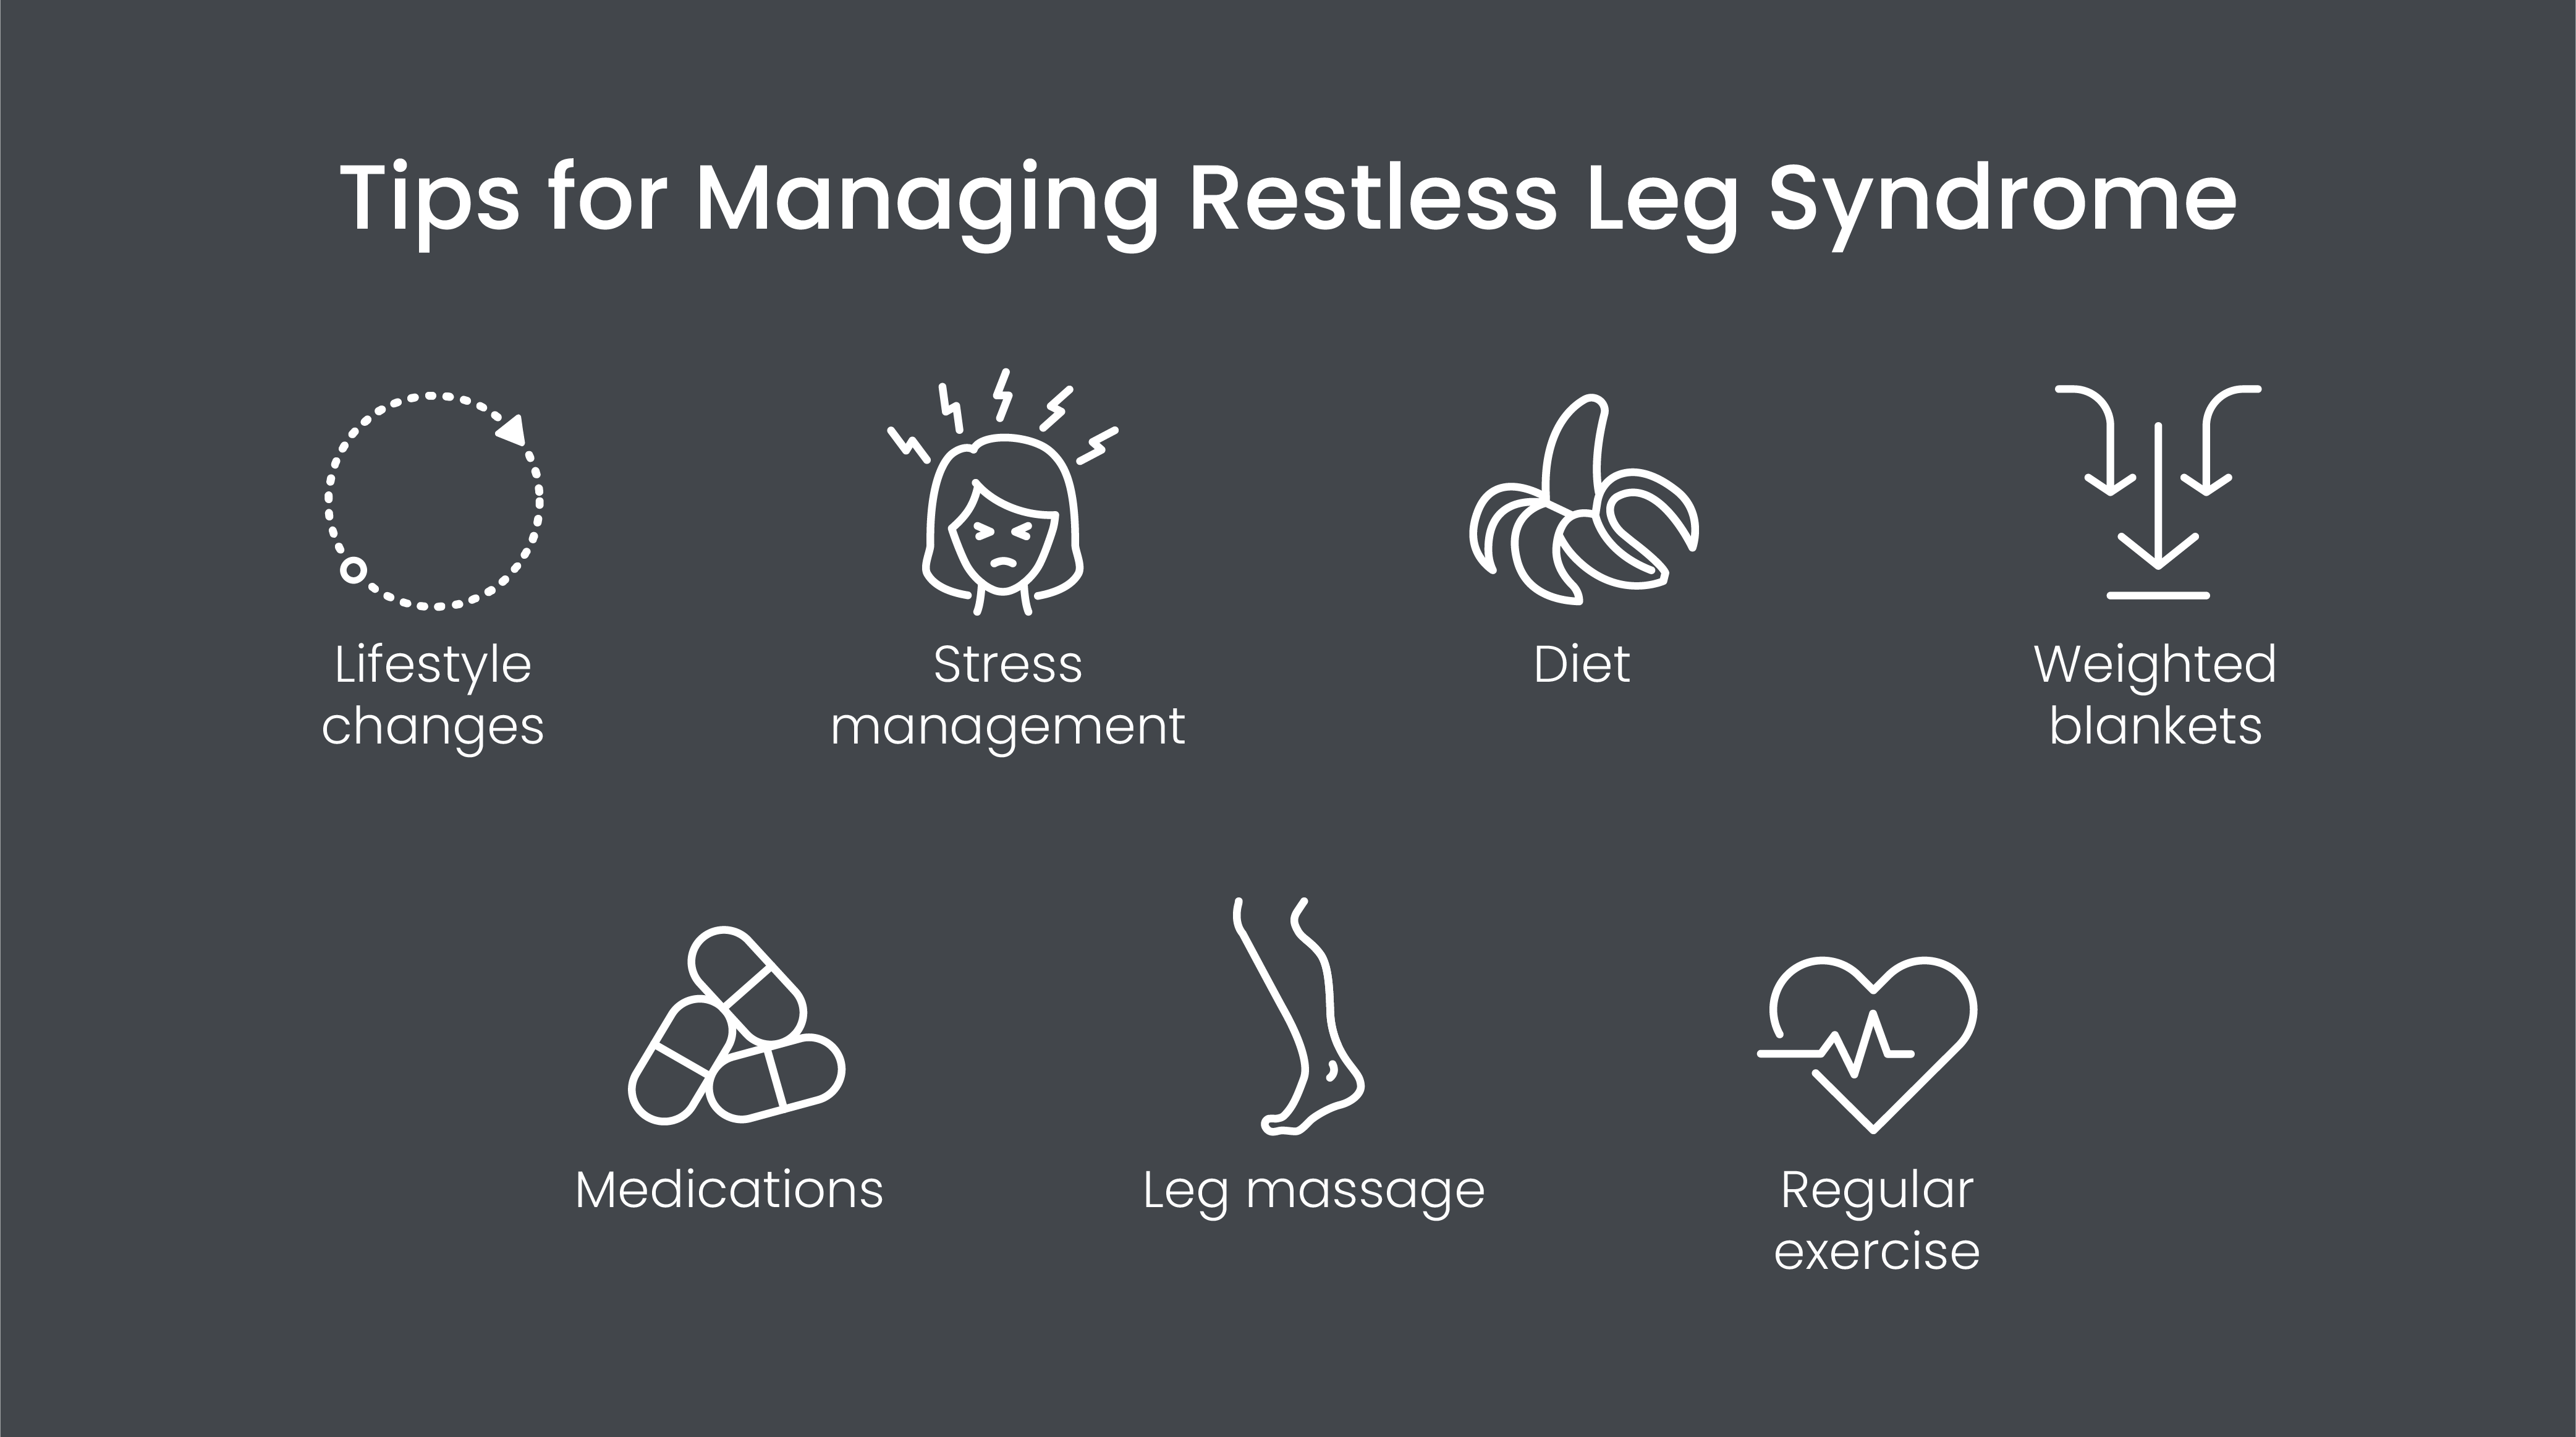 Tips for managing restless leg syndrome